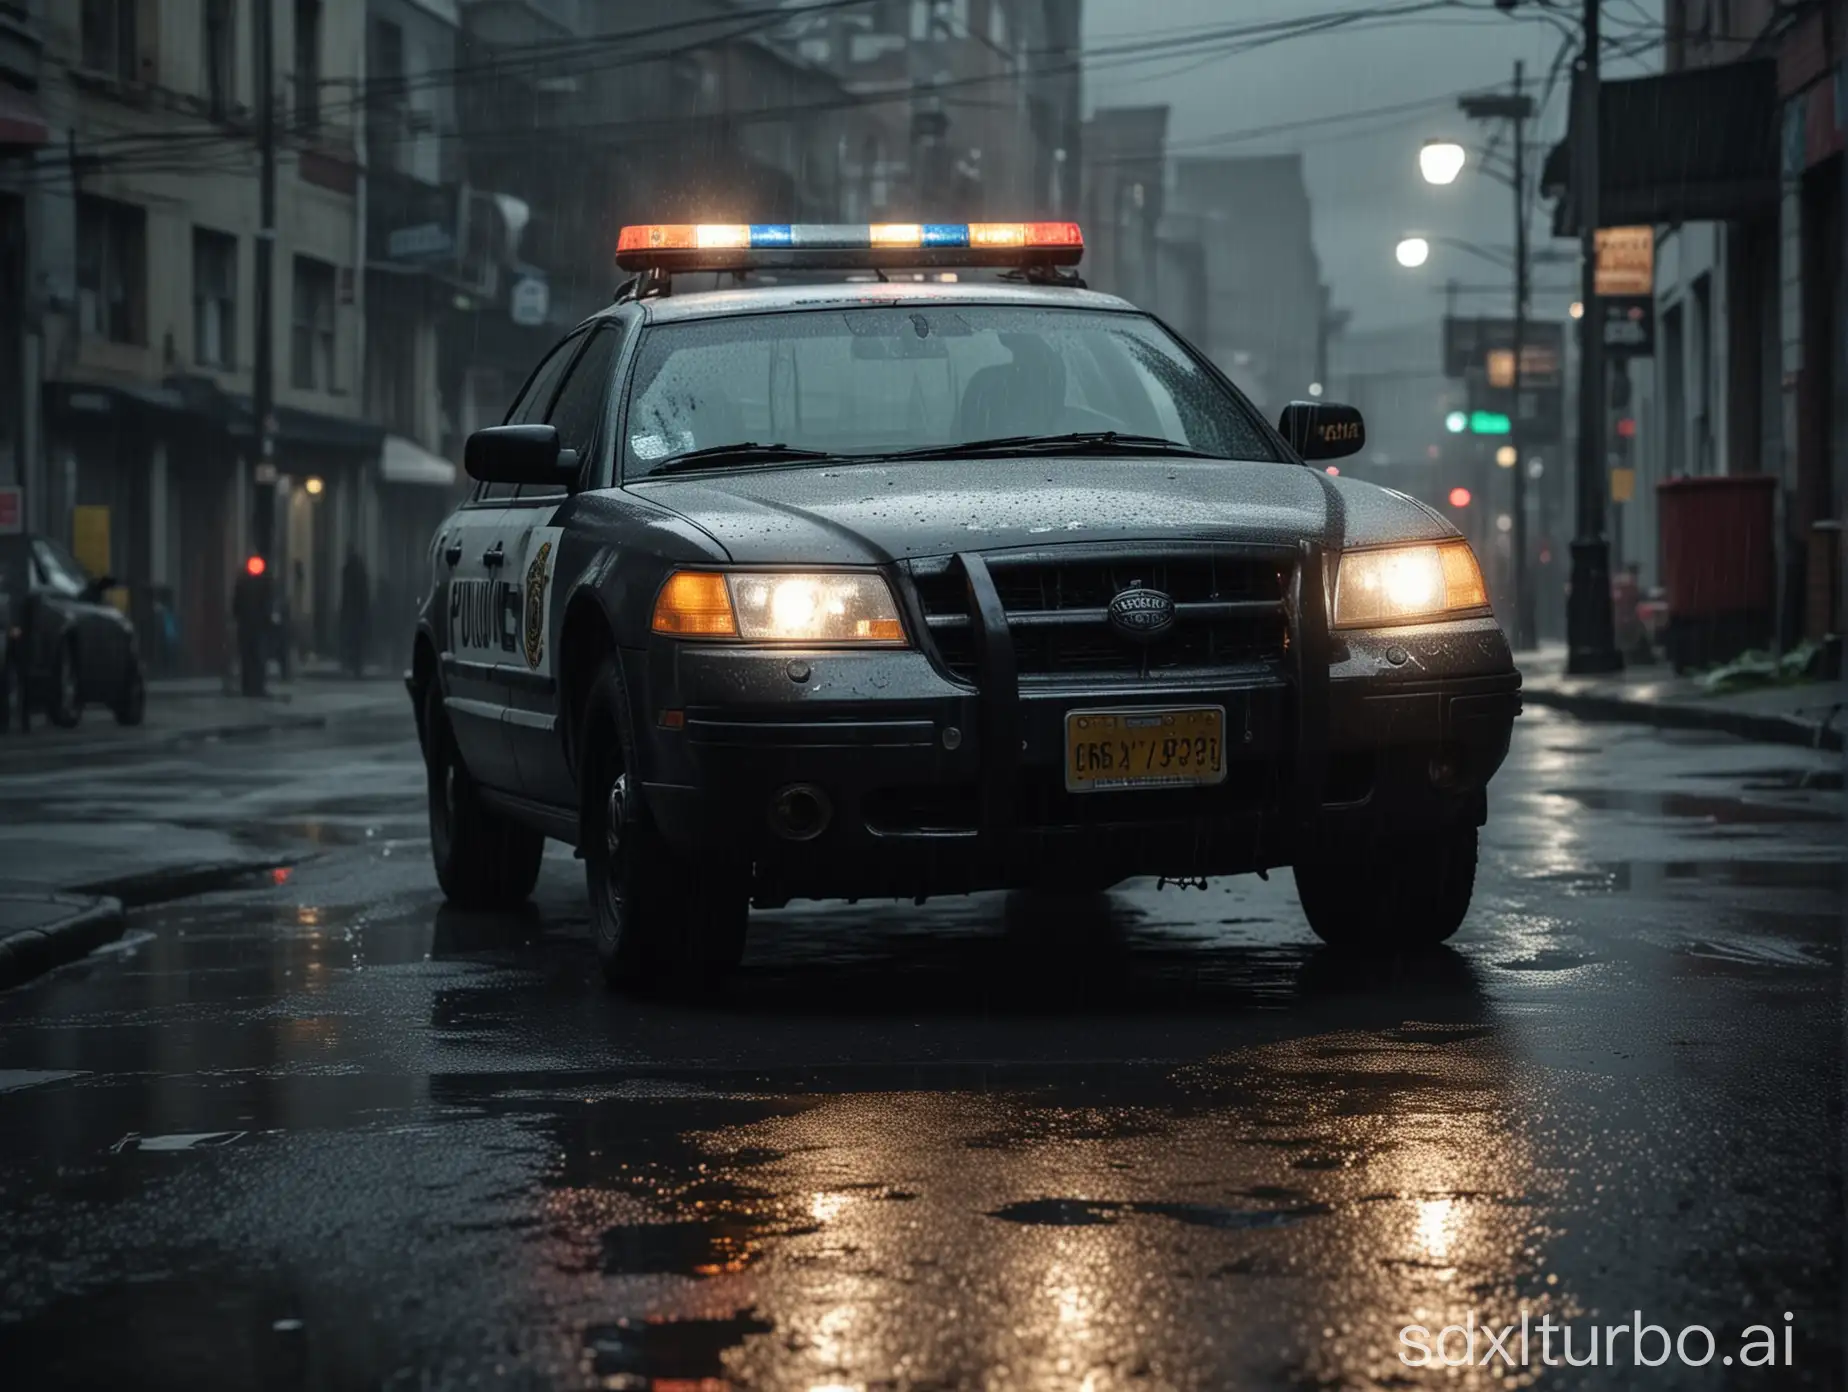 Cinematic-Police-Car-in-Rainy-Hood-Street-Scene